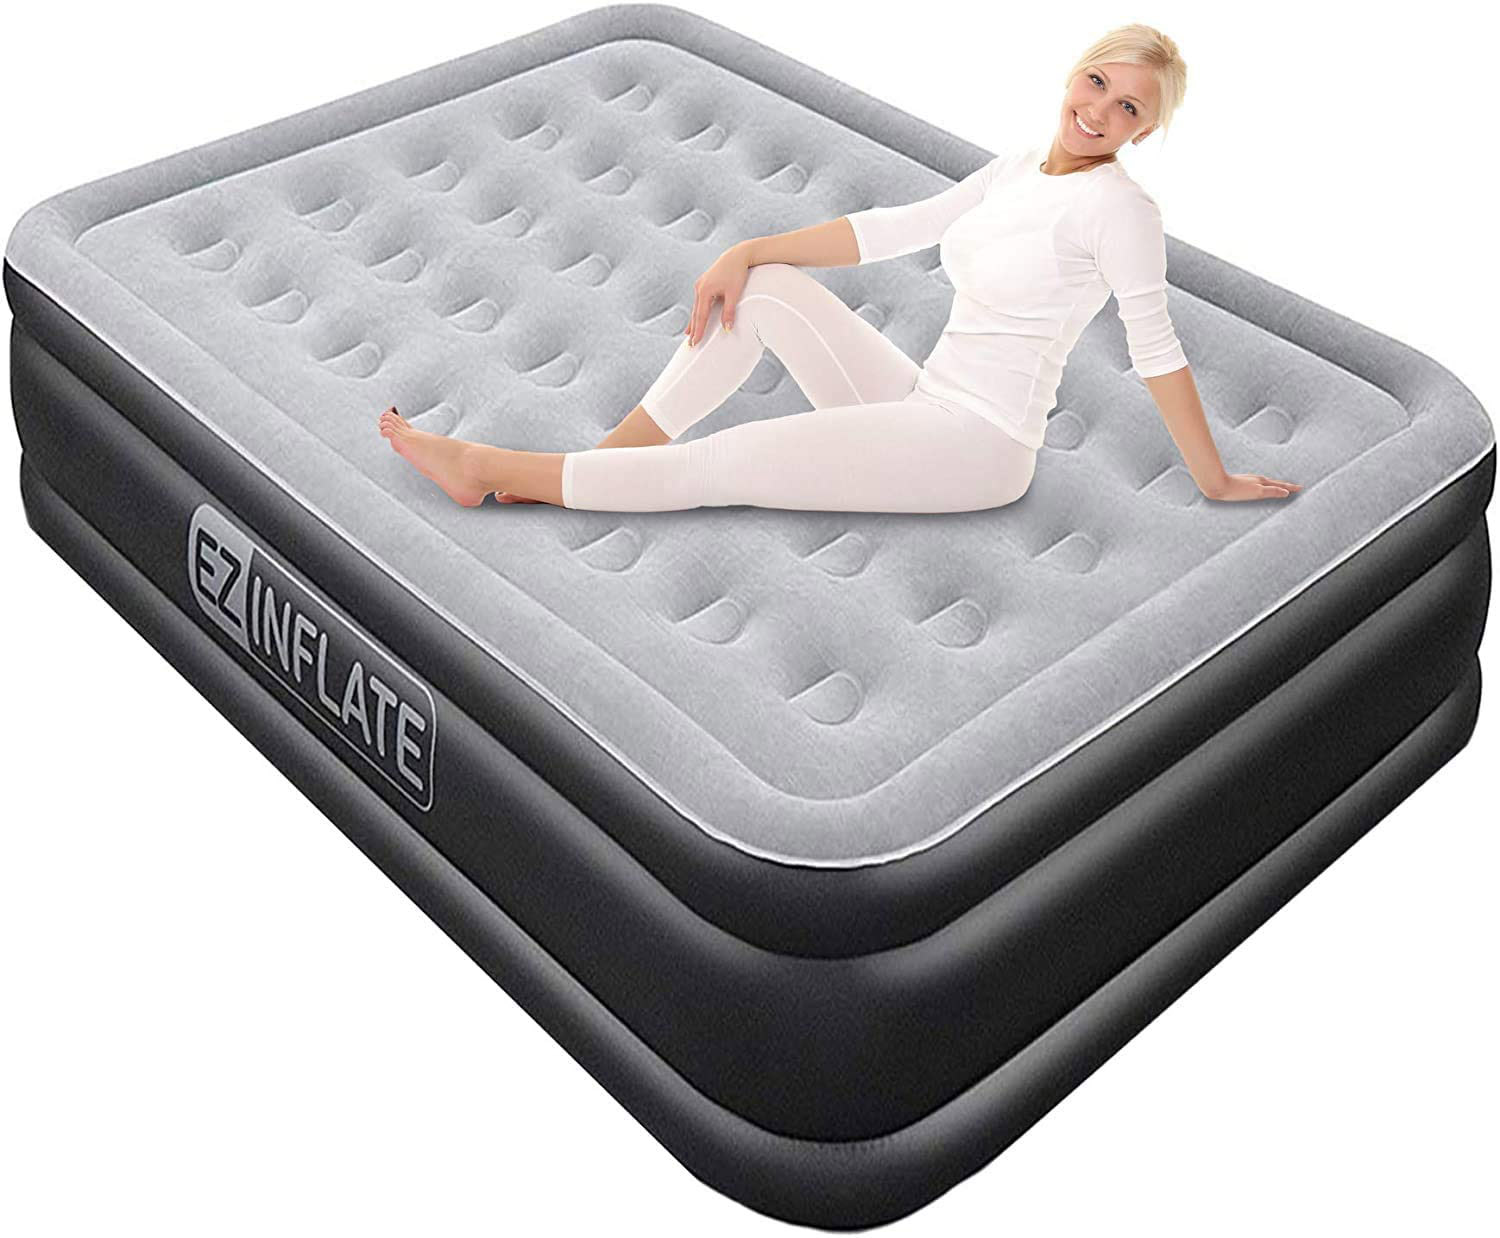 camping mattress air or foam